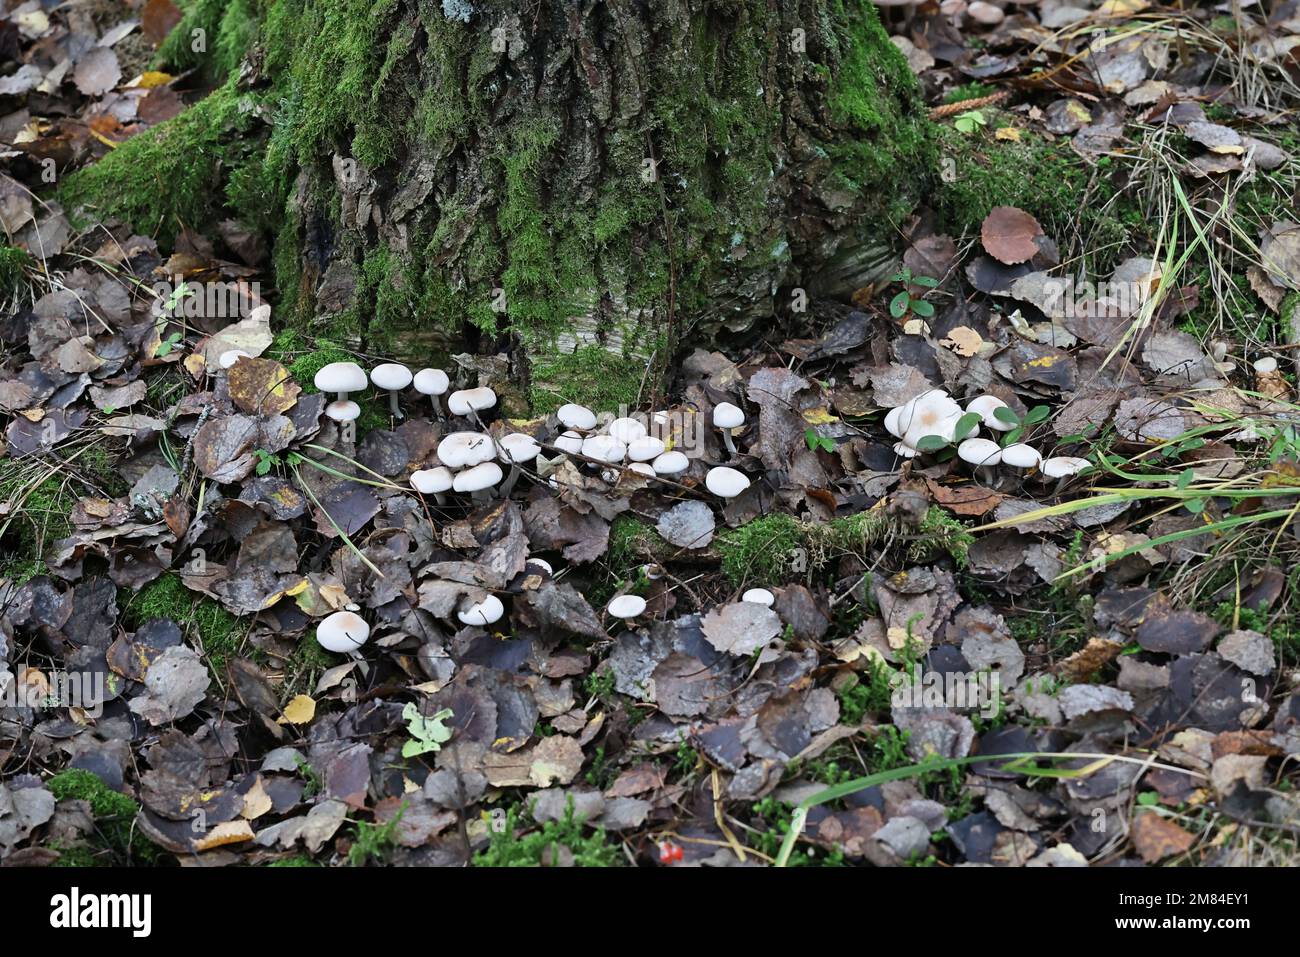 Homophron spadiceum, also called Psathyrella spadicea, commonly known as chestnut brittlestem, wild mushroom from Finland Stock Photo